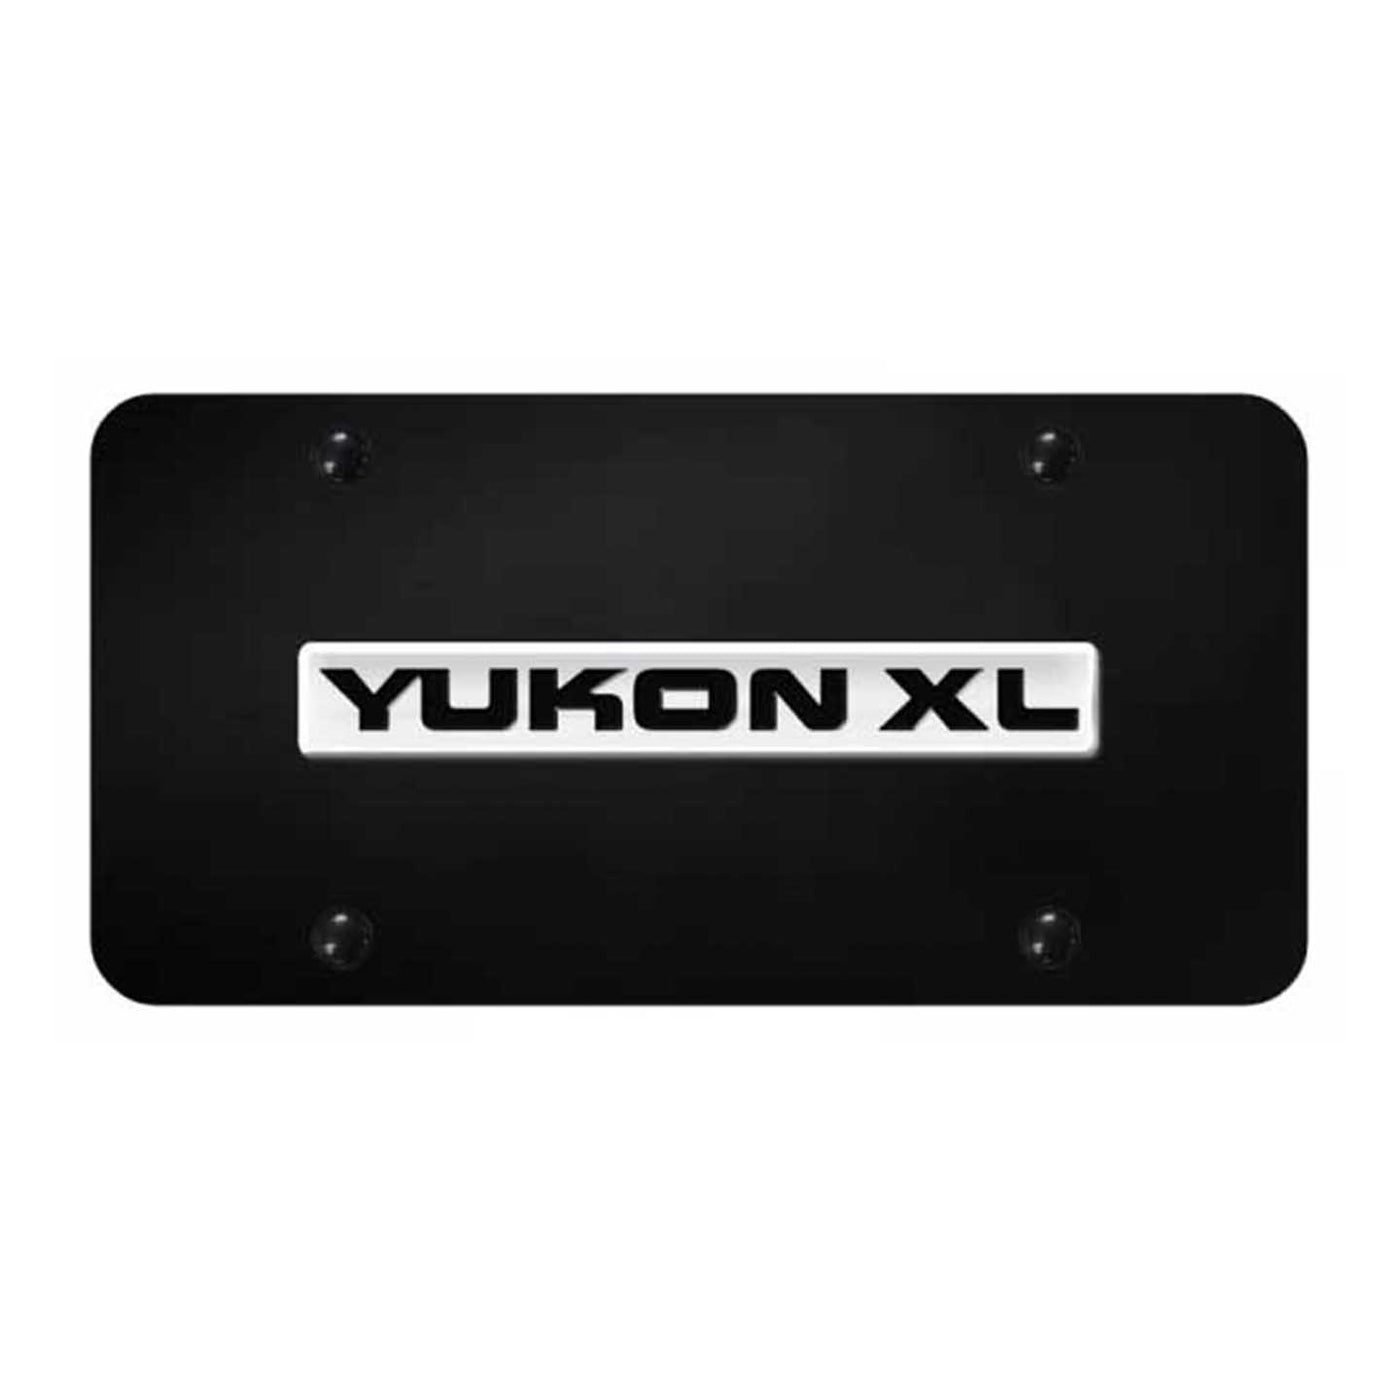 Yukon XL Name License Plate - Chrome on Black